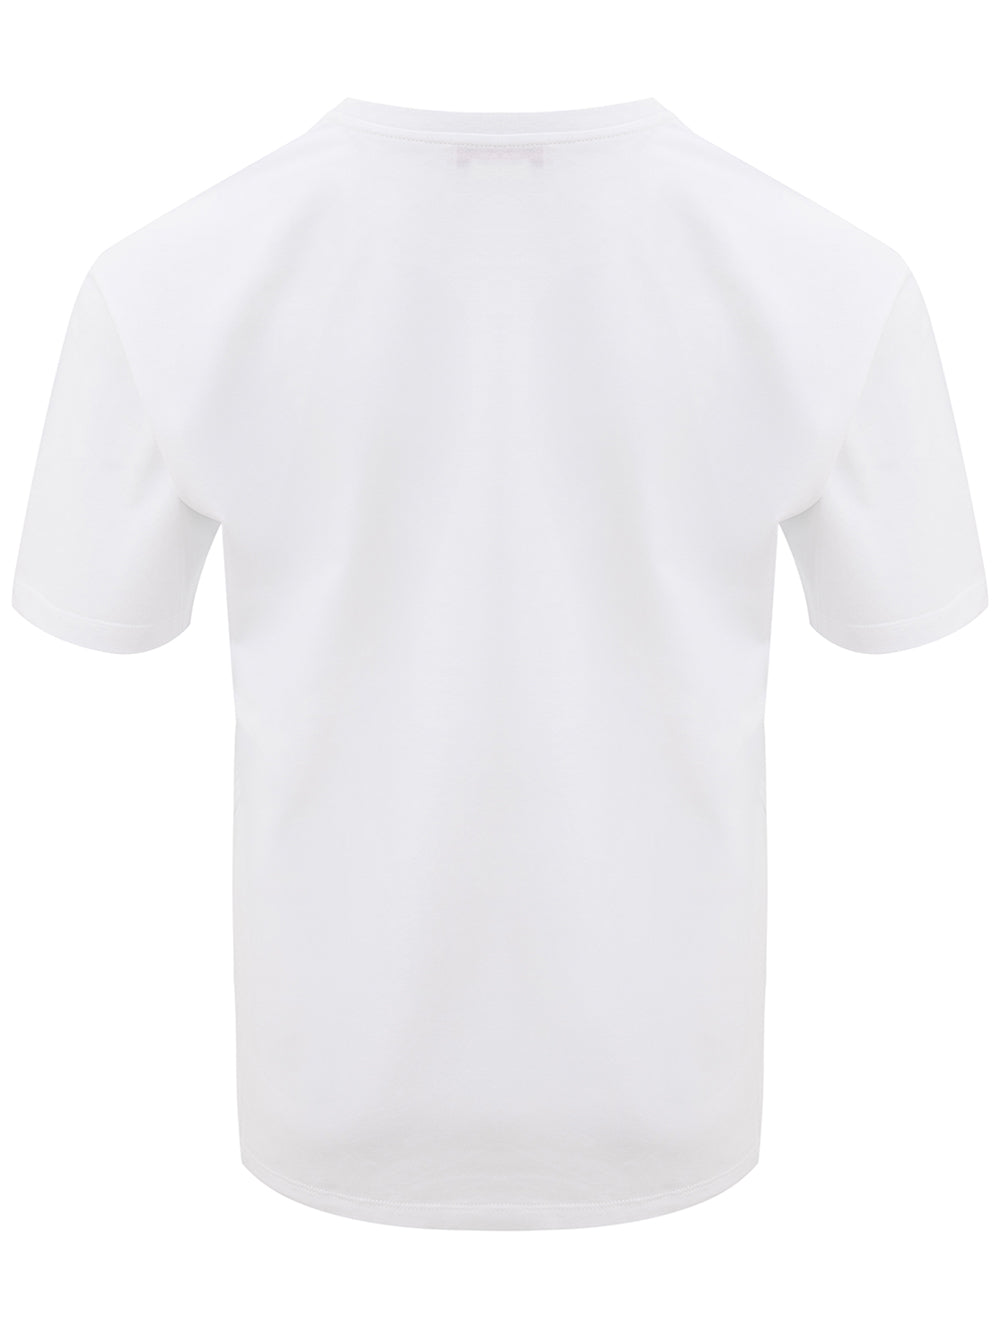 McQueen White T-Shirt